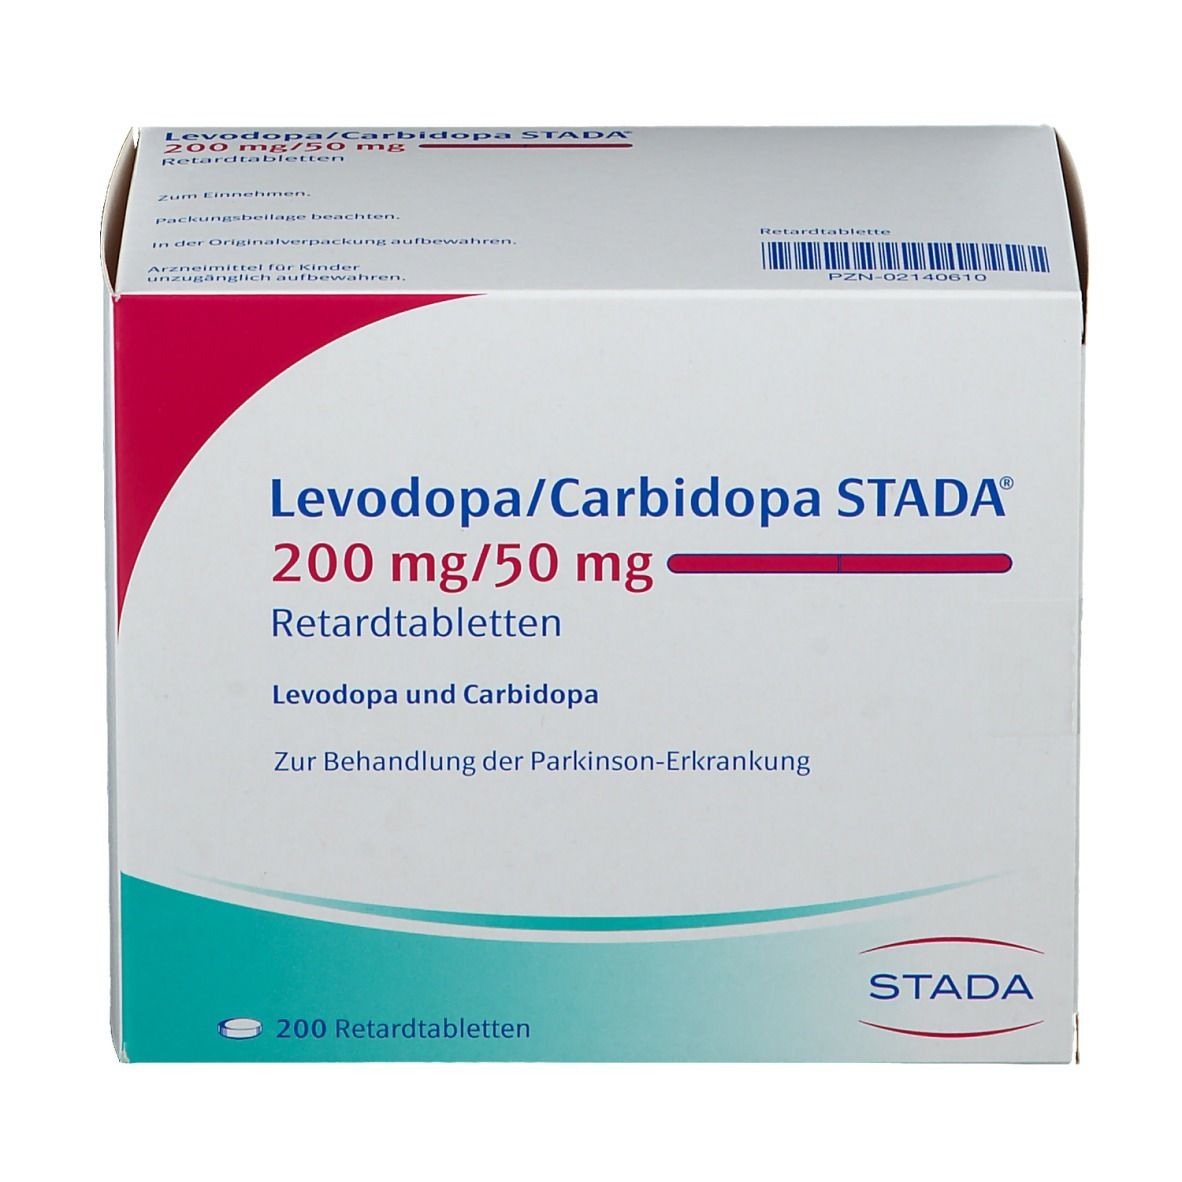 Levodopa/Carbidopa STADA® 200 mg/50 mg